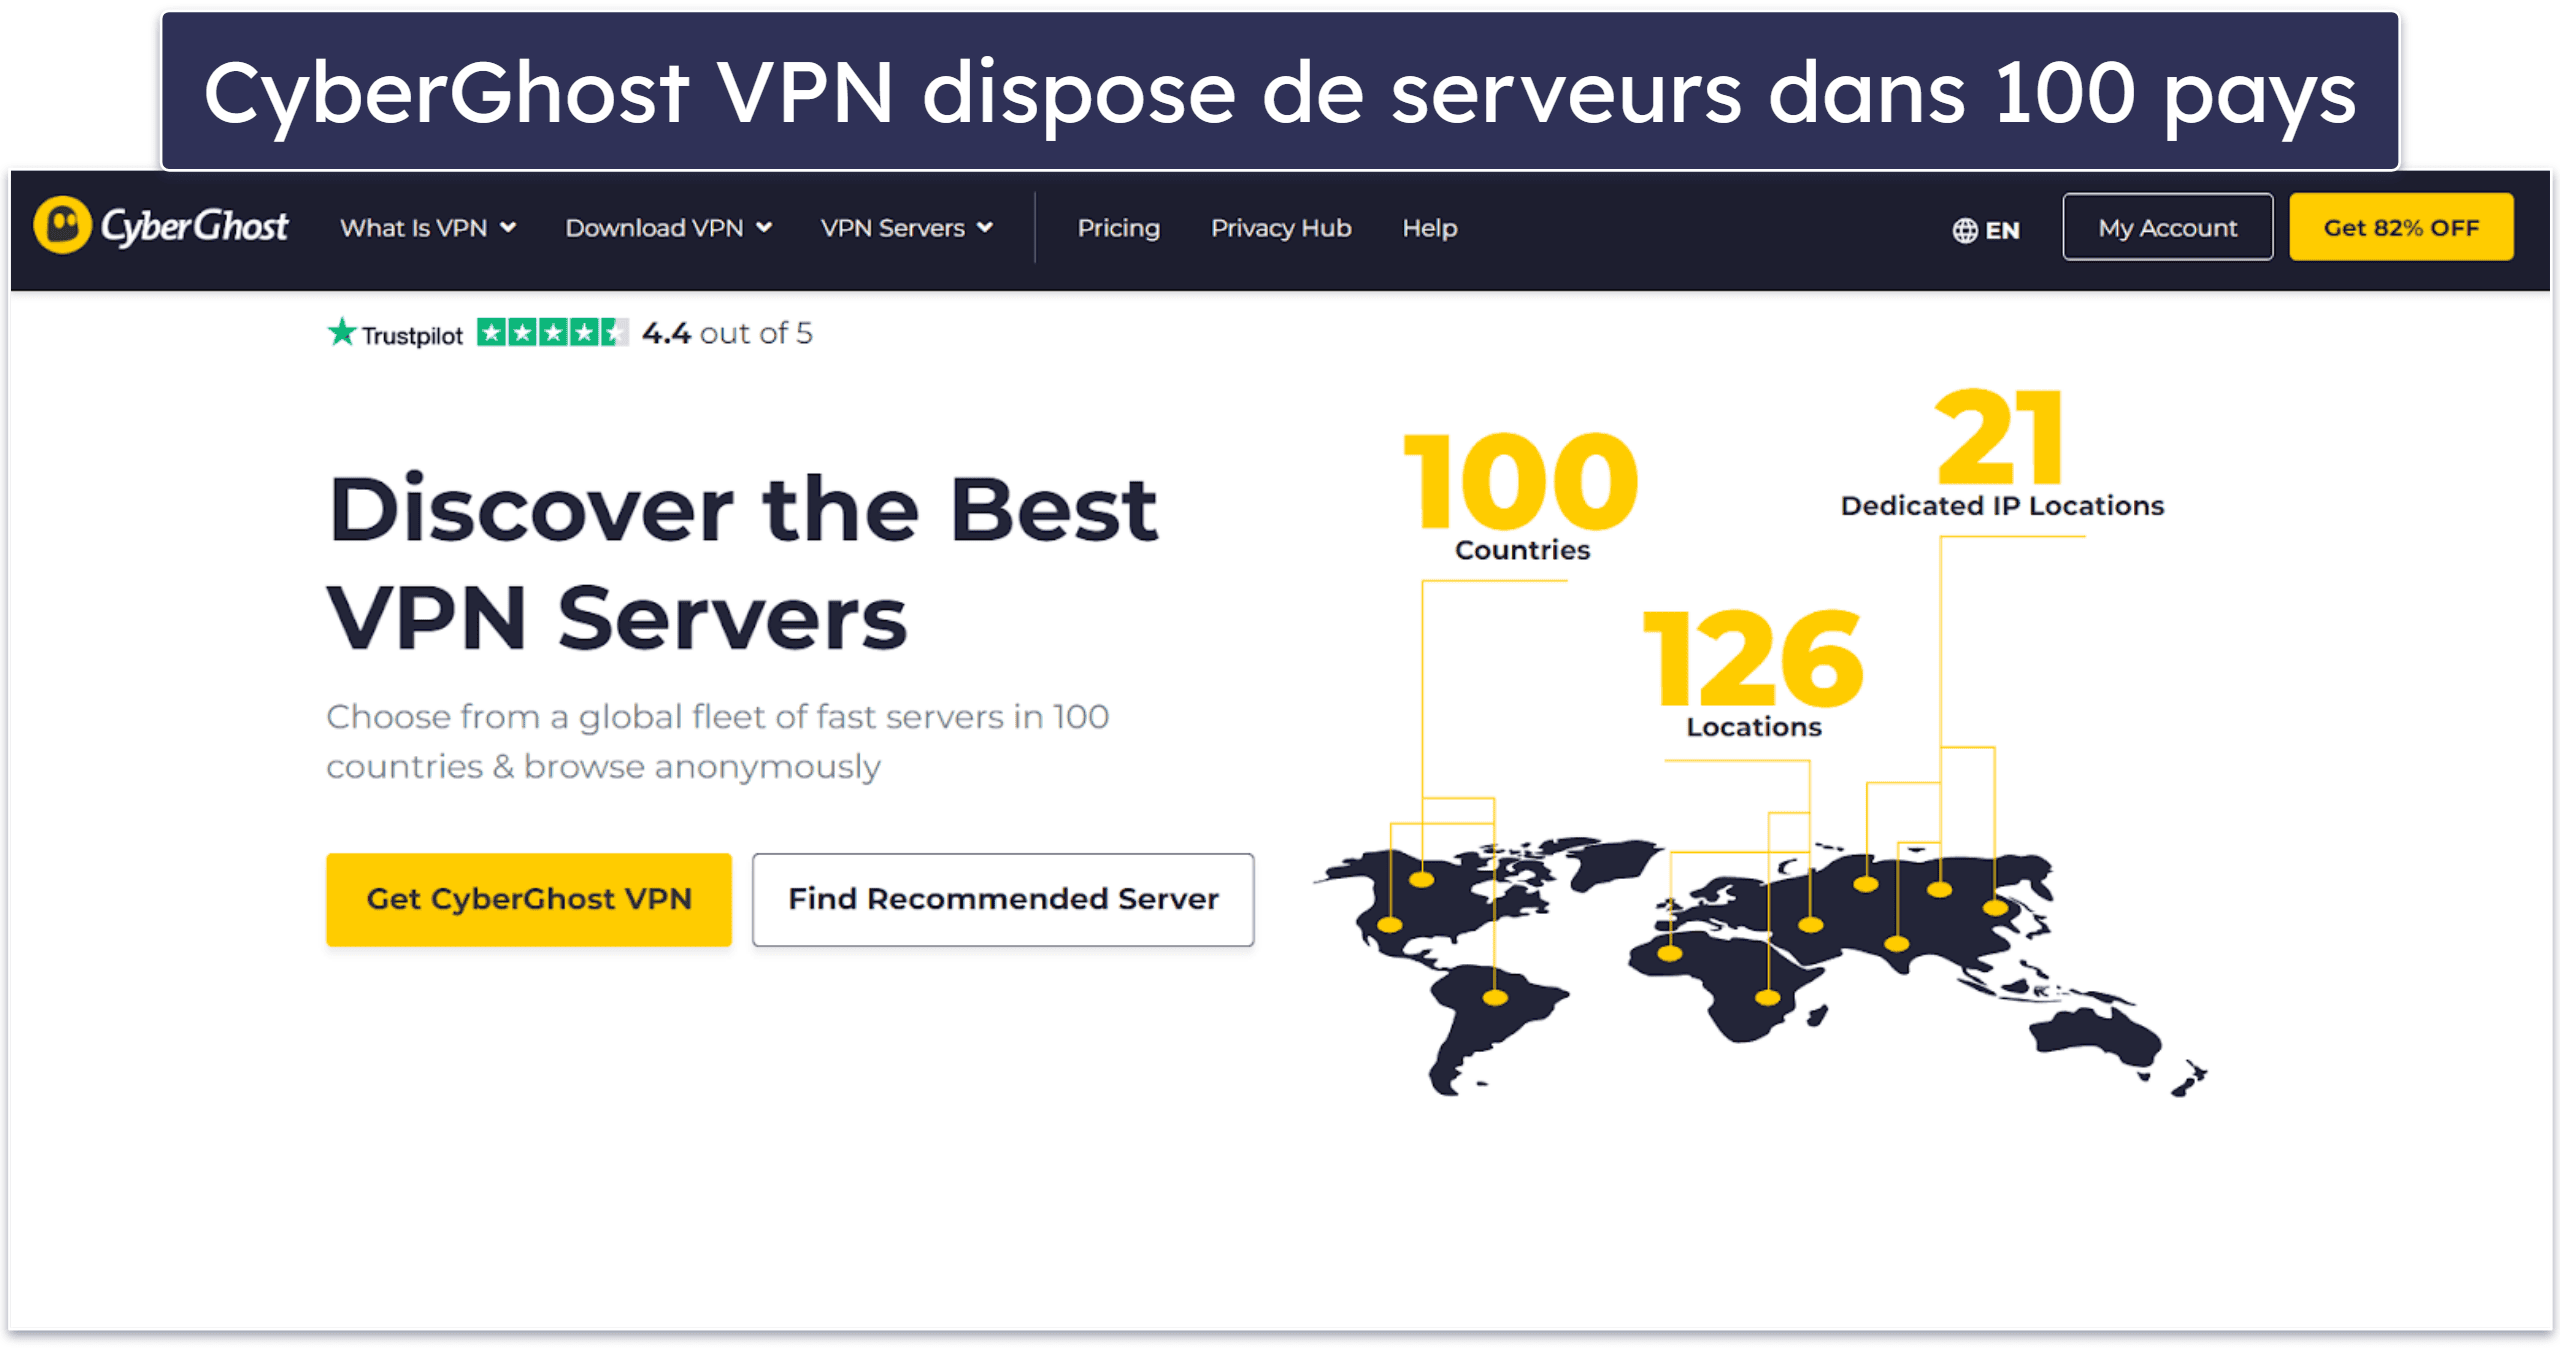 Serveurs et adresses IP de CyberGhost VPN